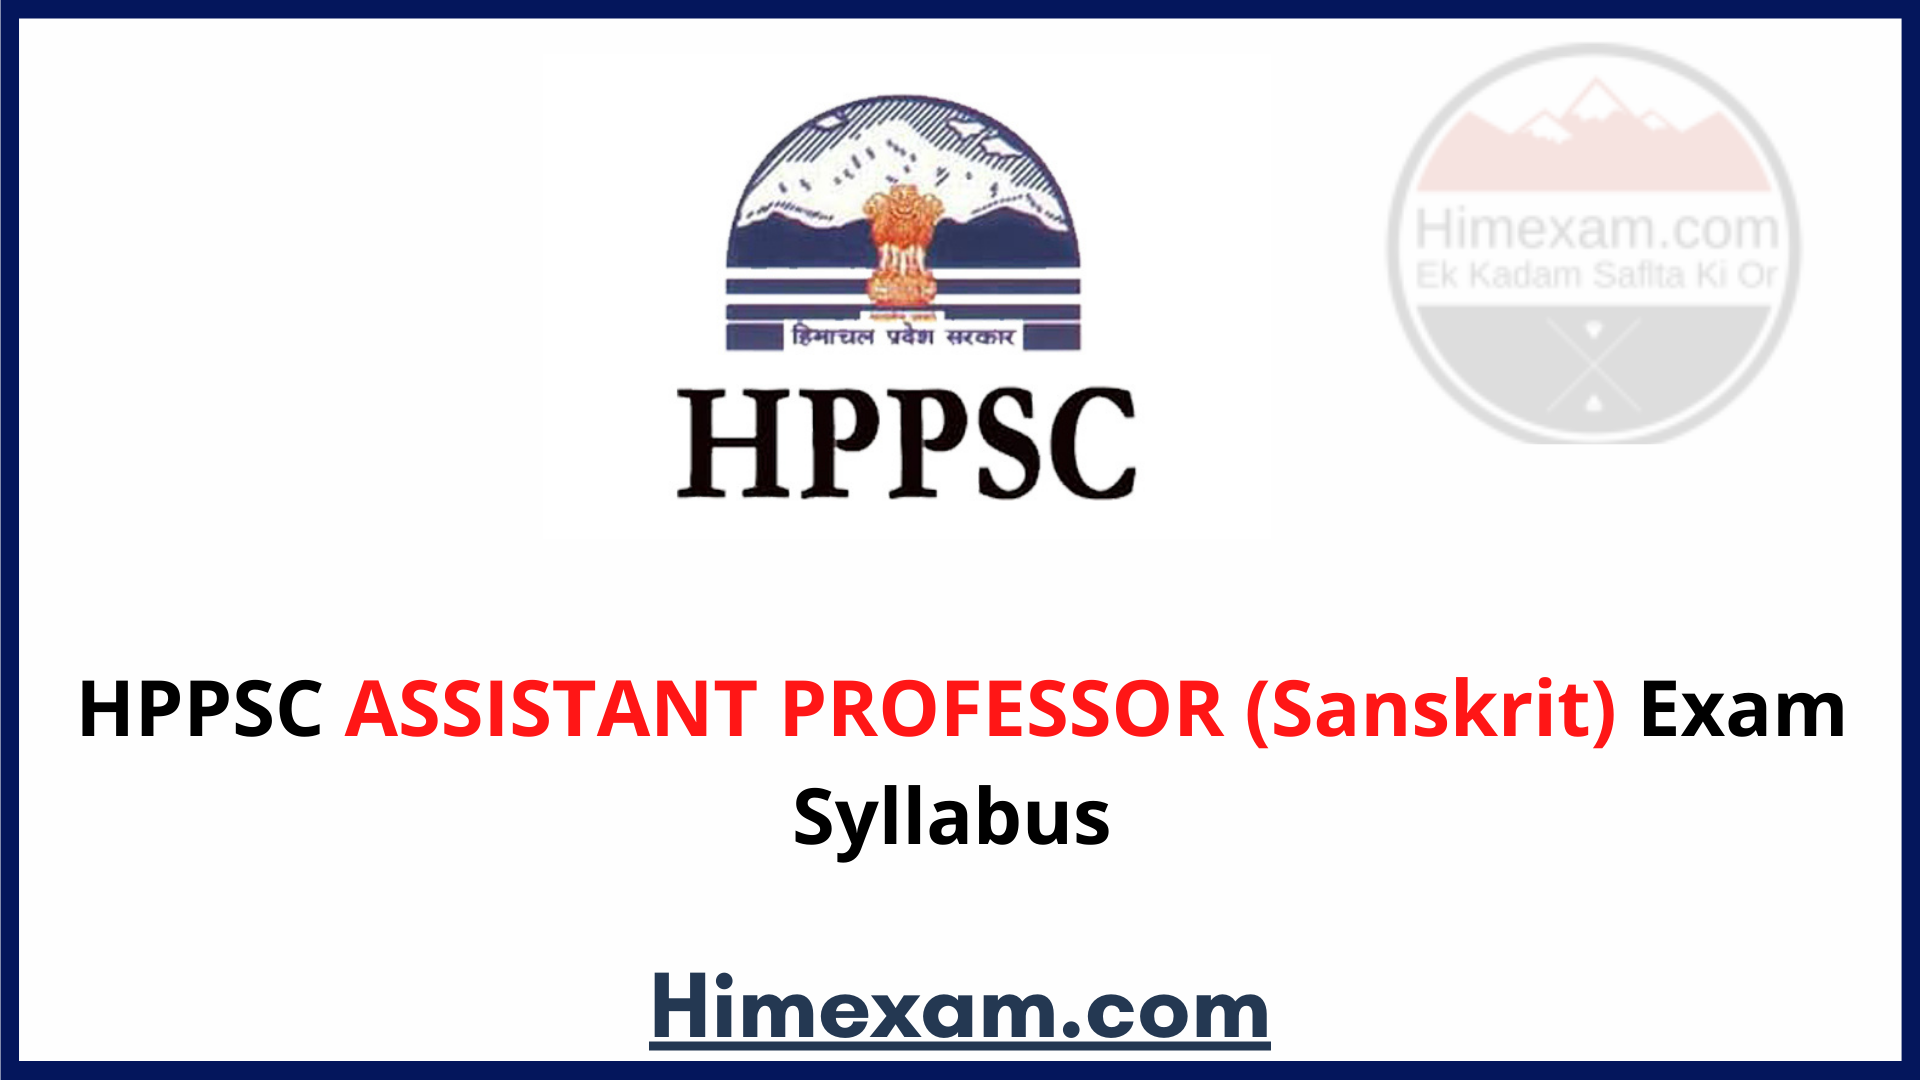 HPPSC ASSISTANT PROFESSOR (Sanskrit) Exam Syllabus